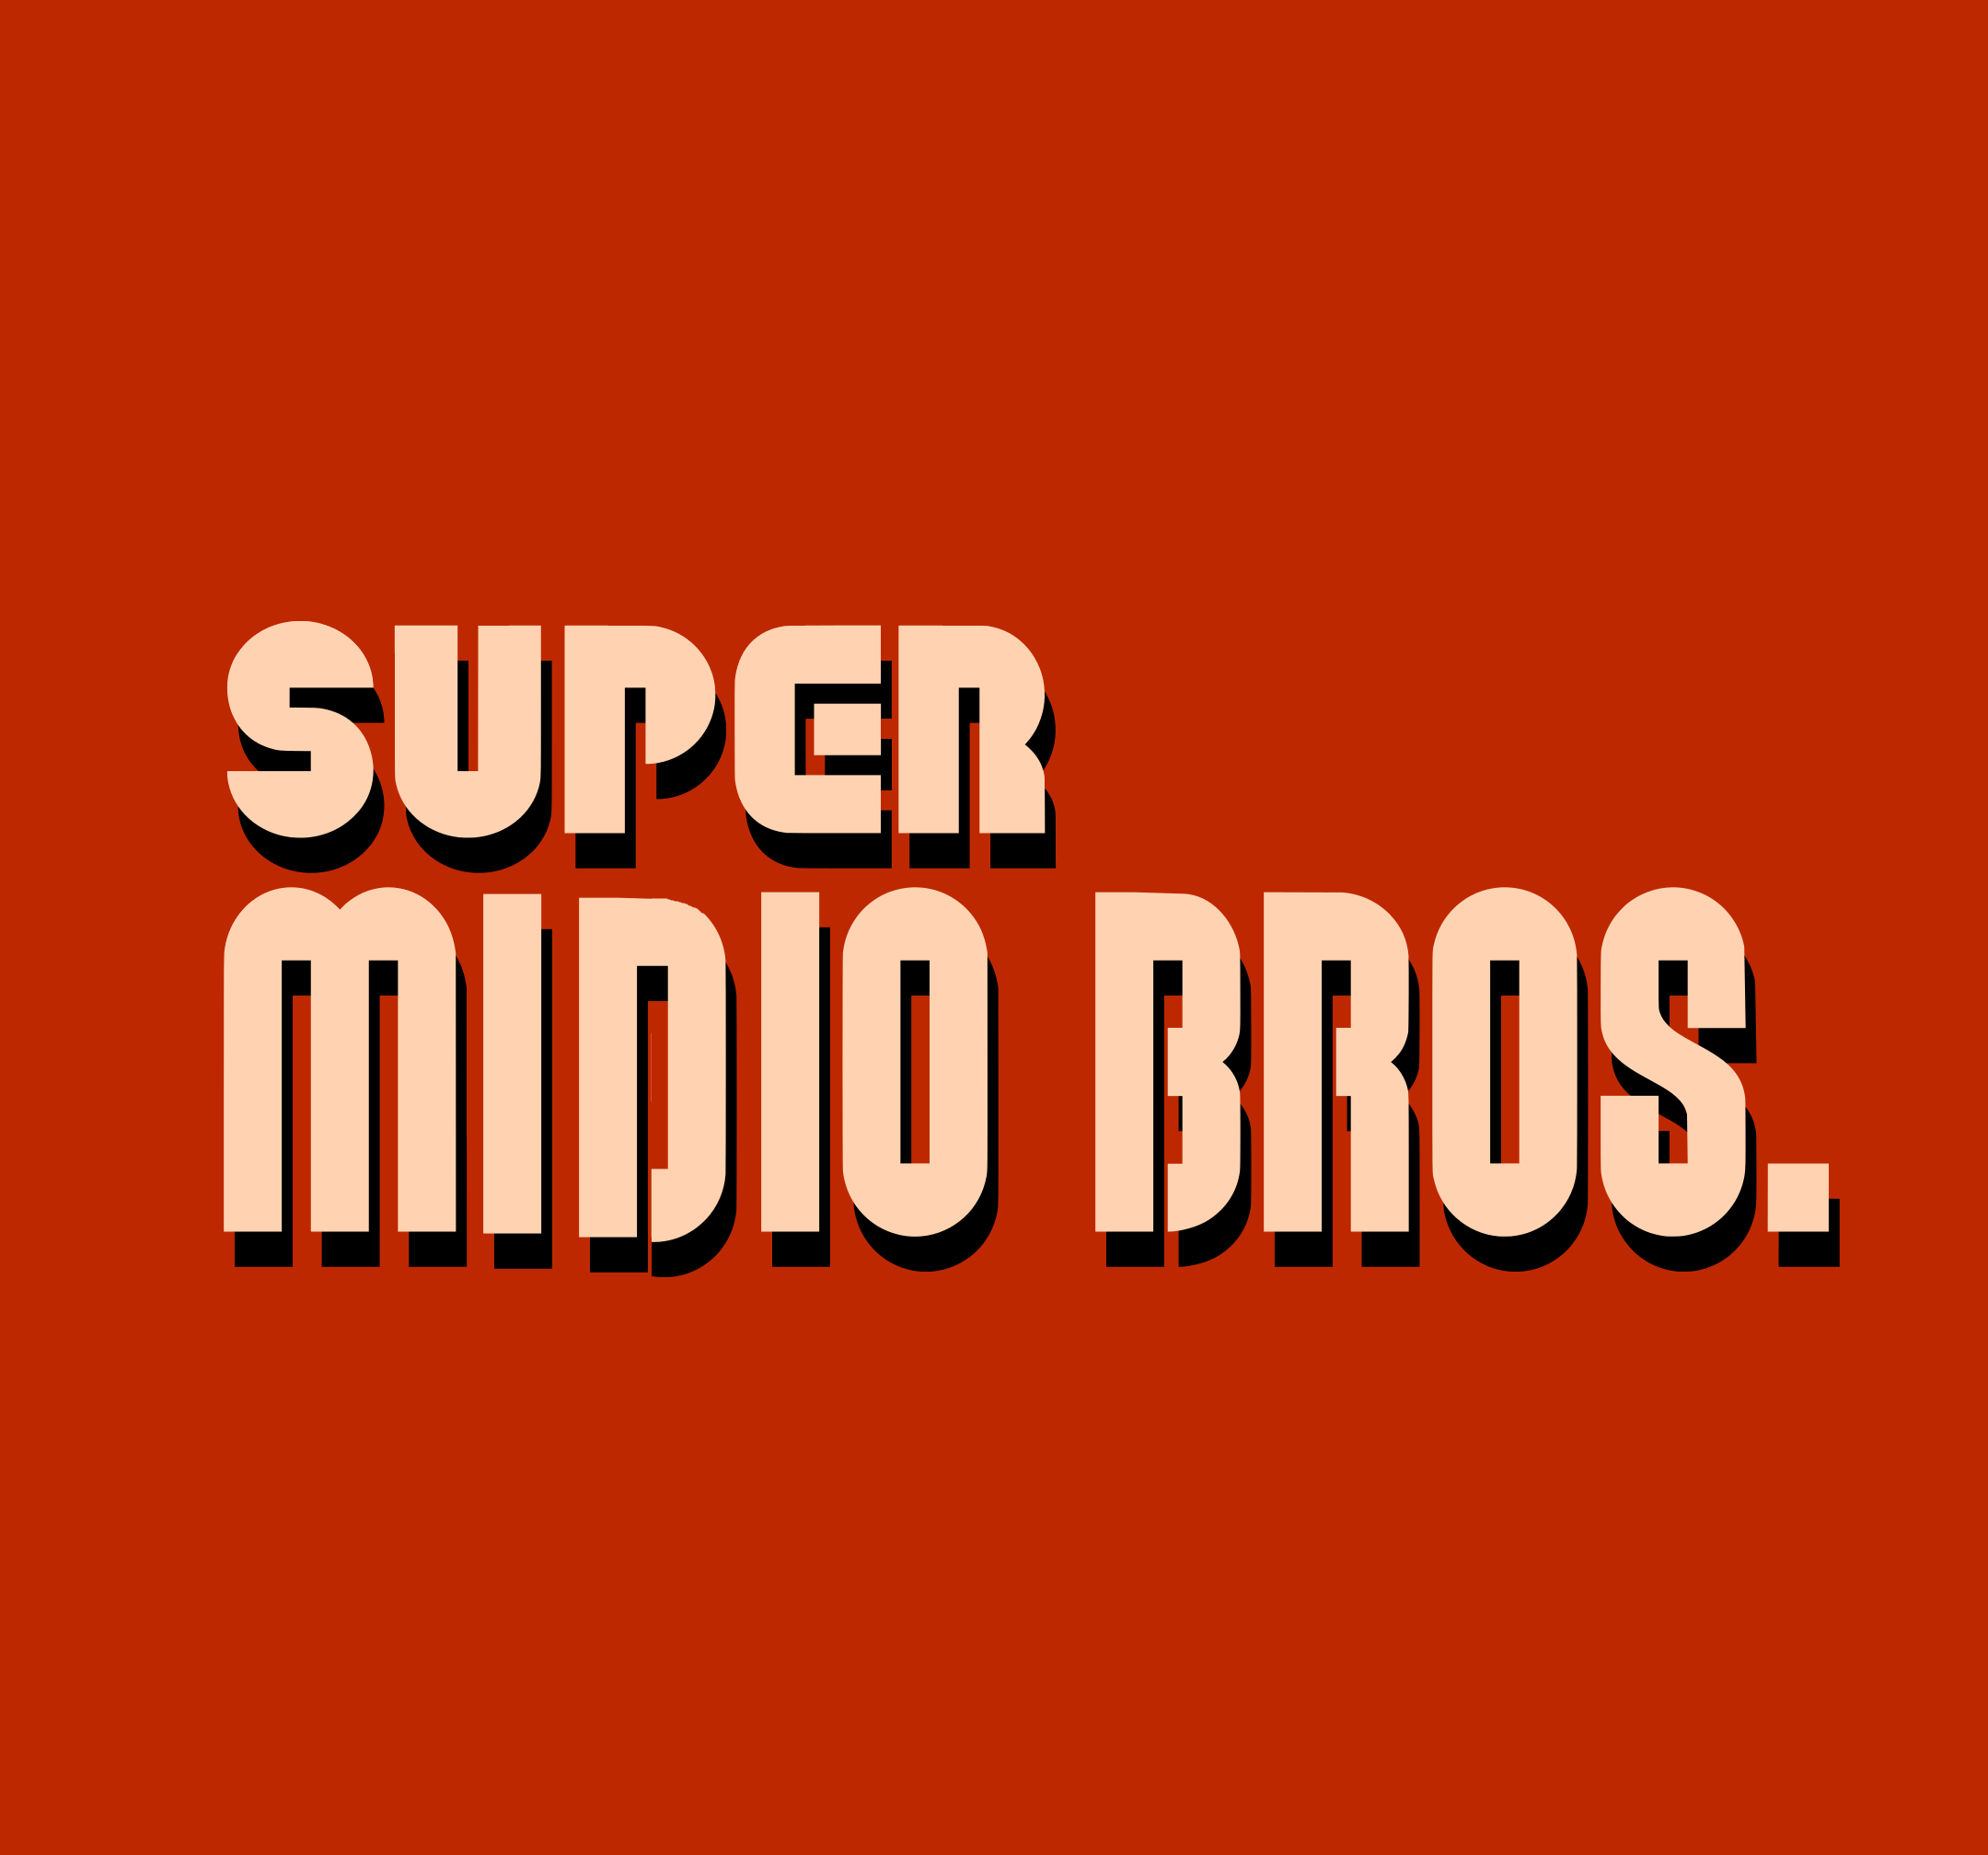 Super MIDIo Bros project card background picture